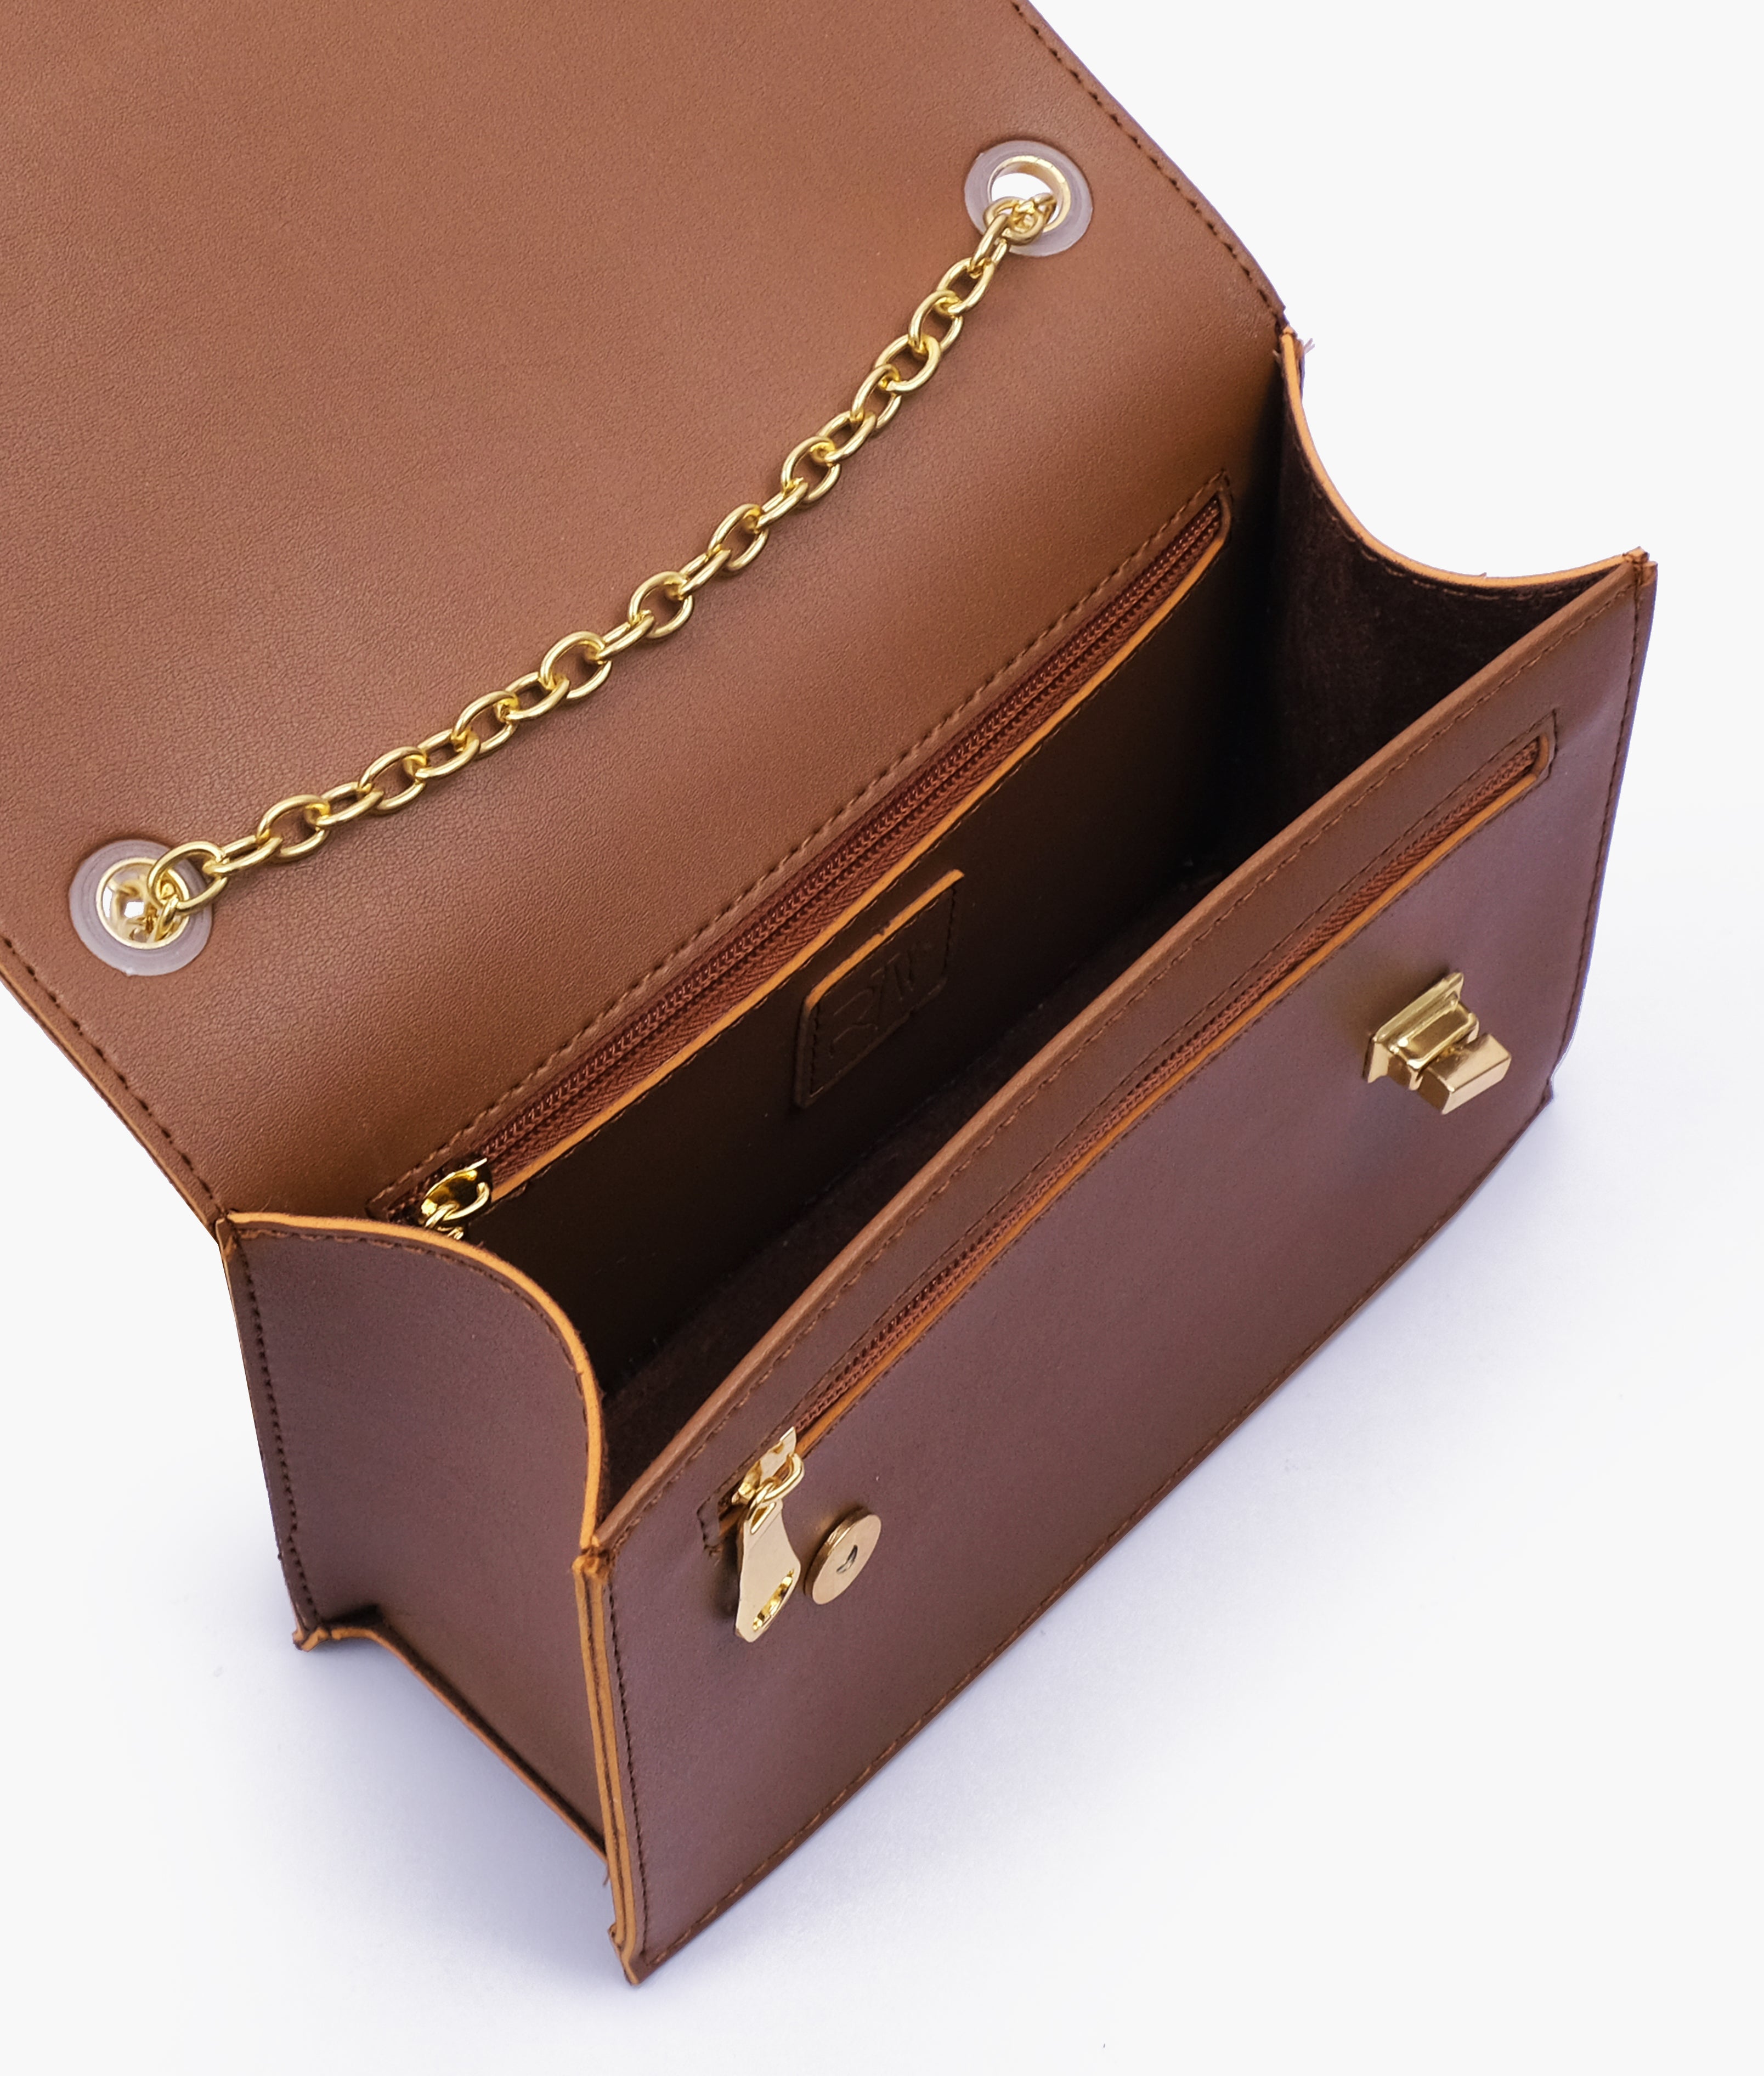 Brown chain shoulder bag with twist lock